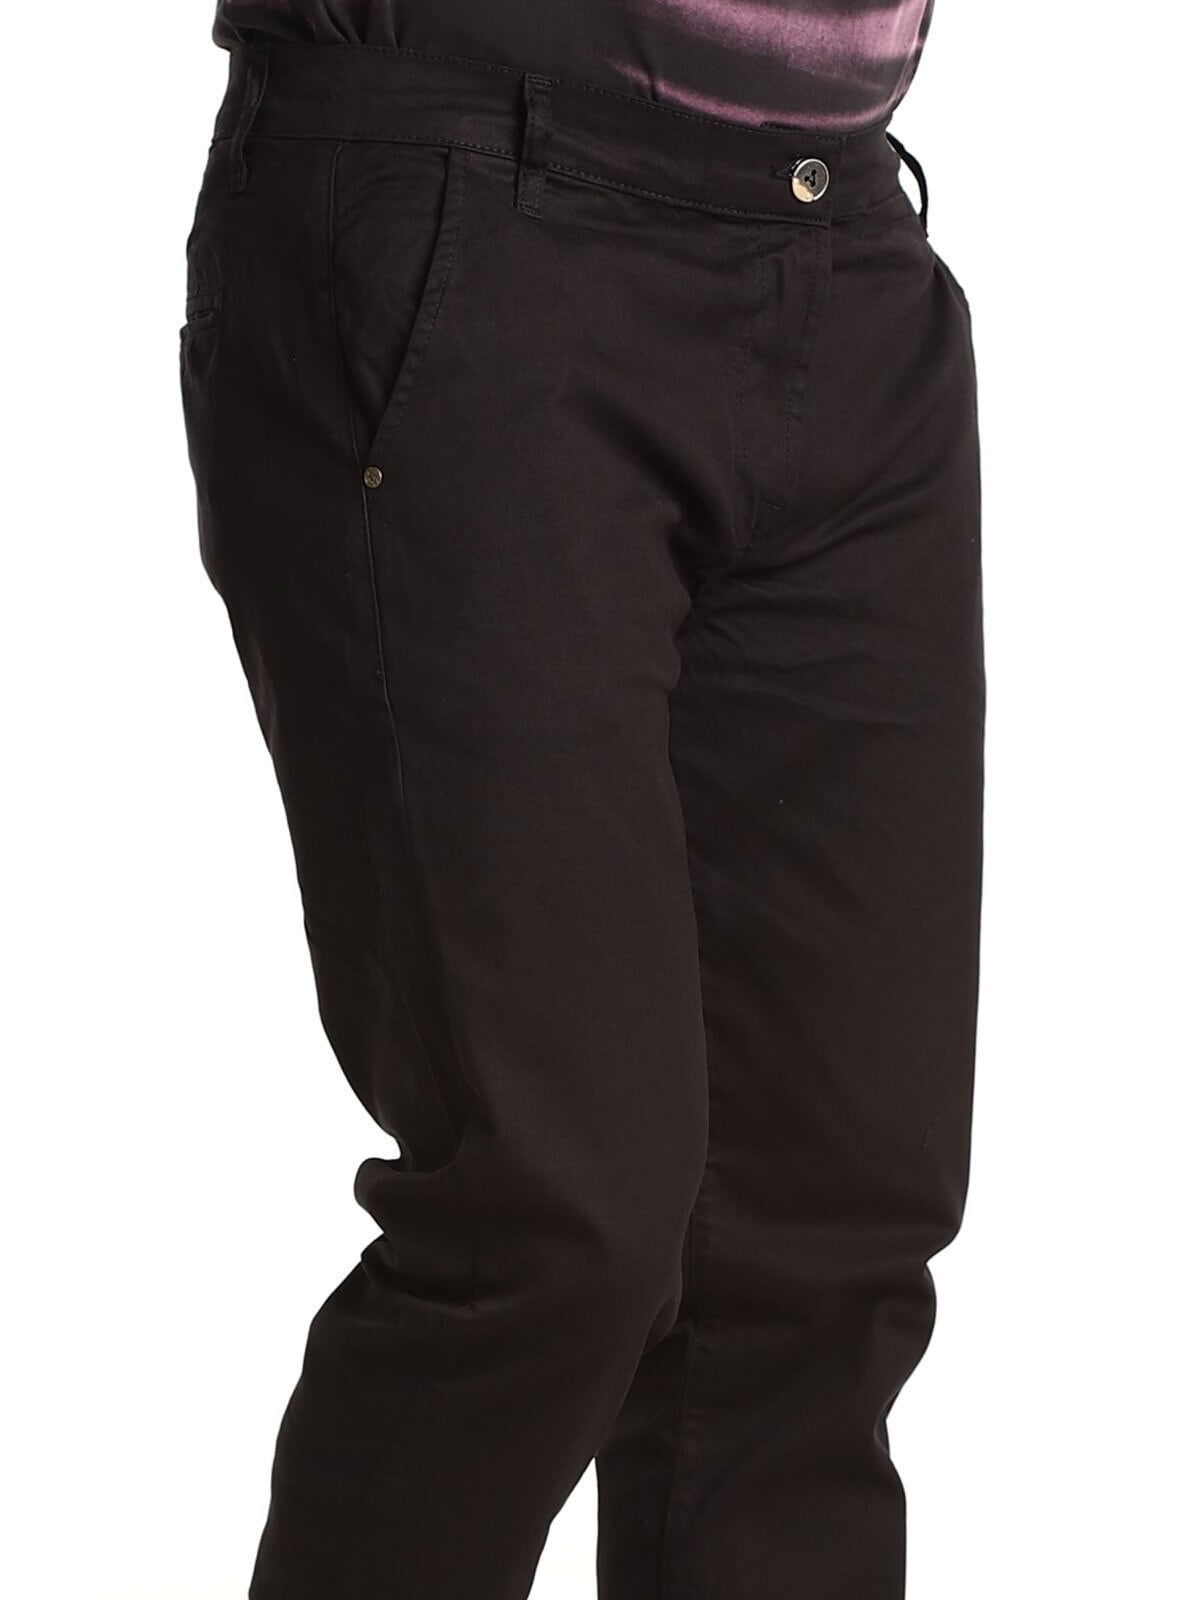 Spodnie Chinosy Huxley Cipo & Baxx - Czarne